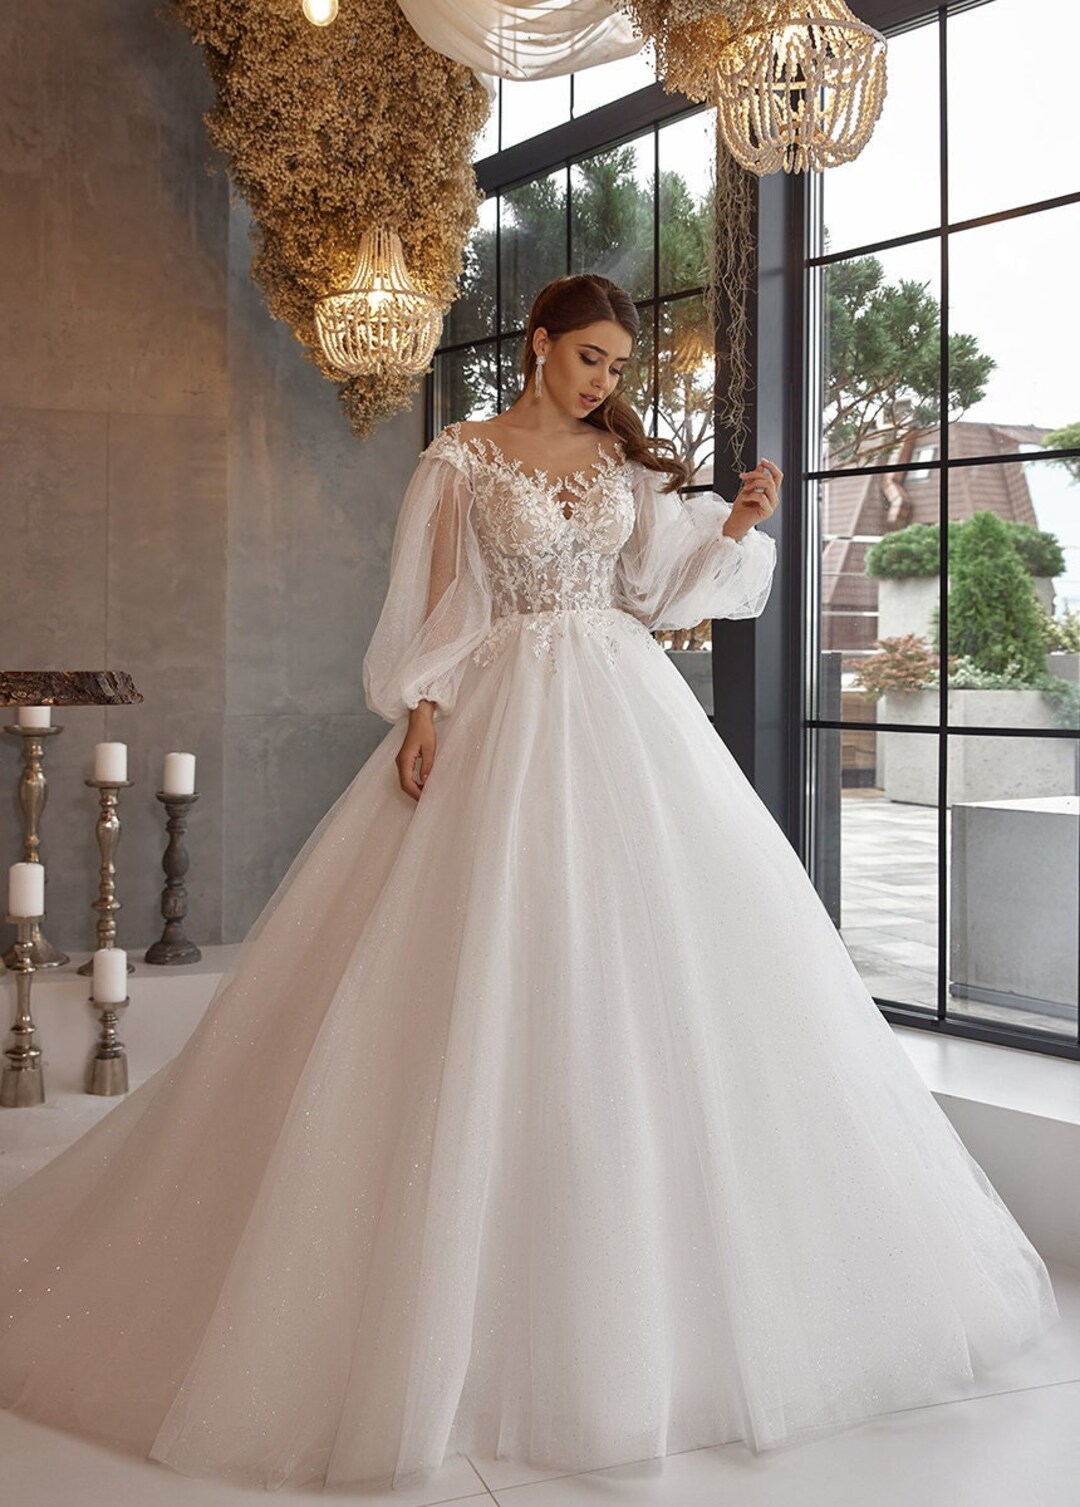 Luxury Bridal Gownwedding Dress Champagne off - Etsy